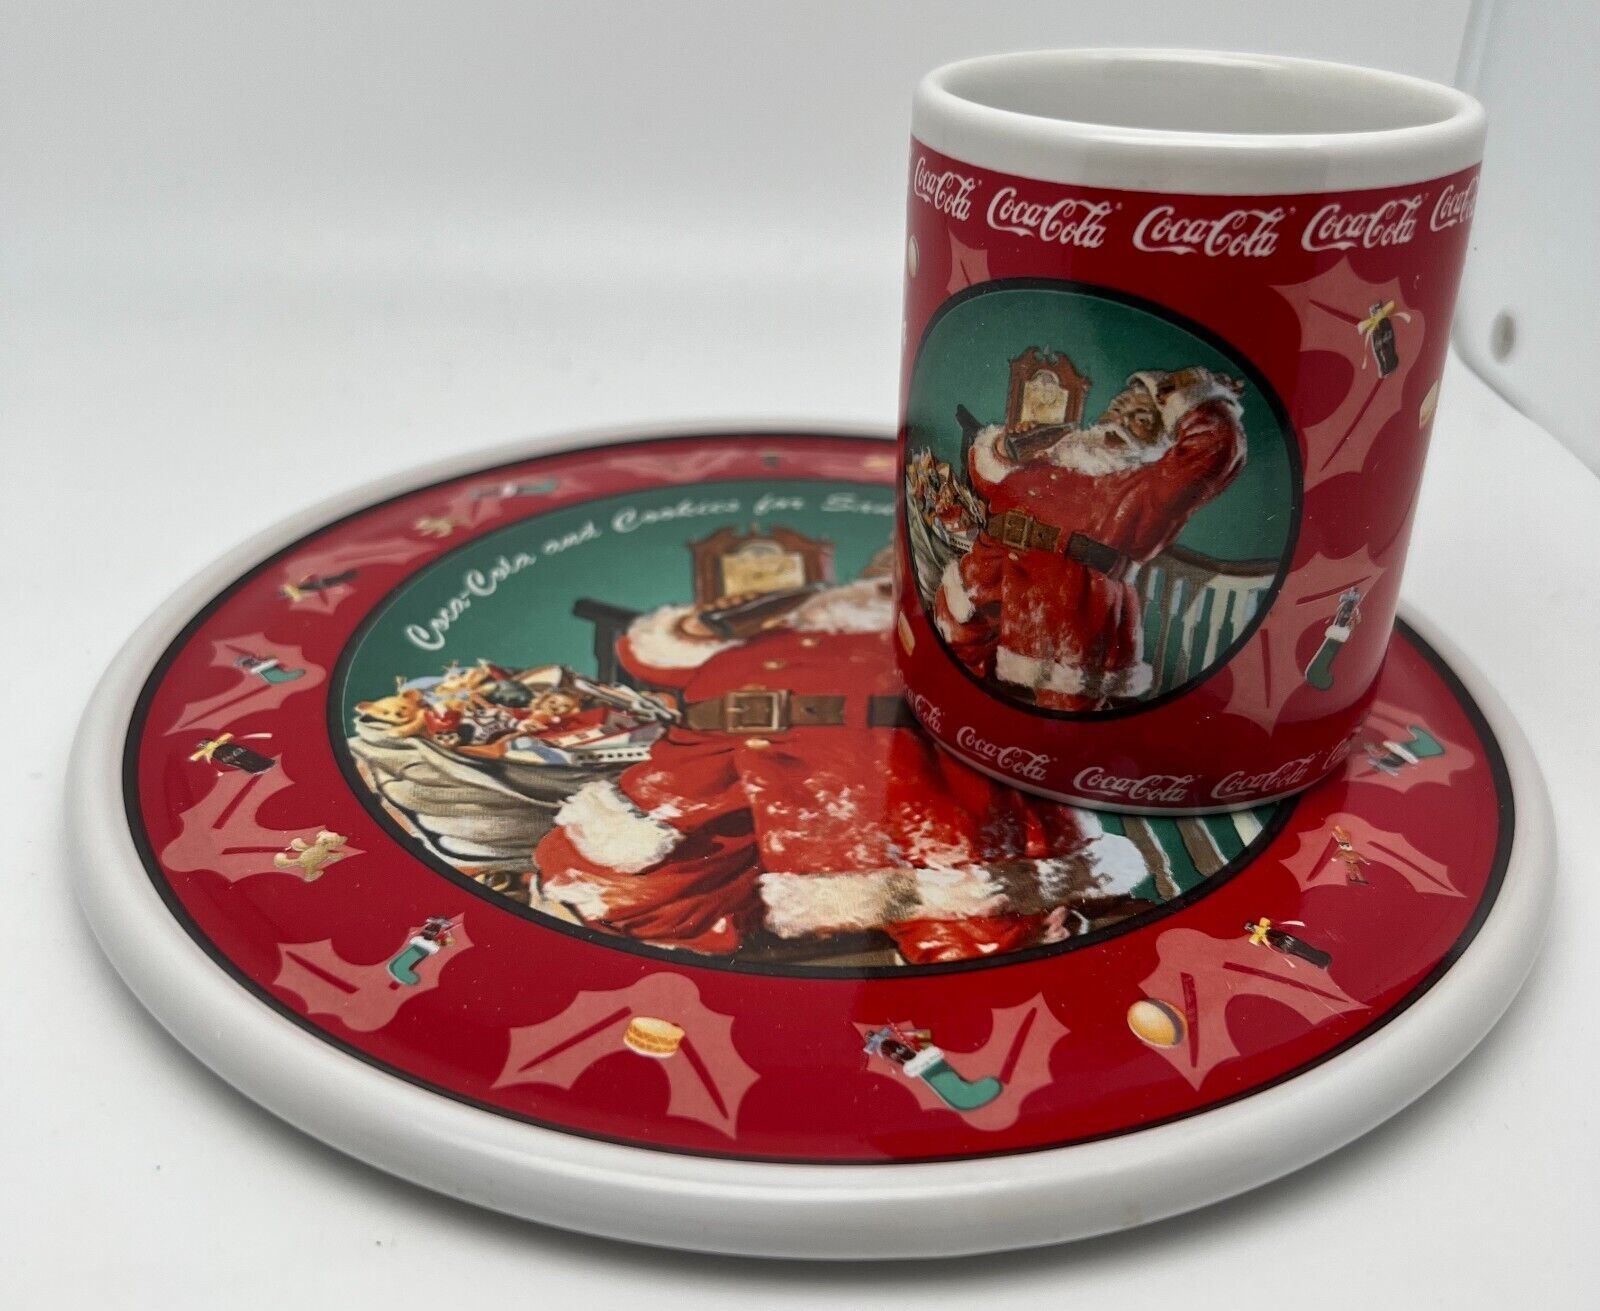 Primary image for Enesco Coca-Cola Santa Cookie Plate Tumbler Set 1998 in ORIGINAL BOX NEW